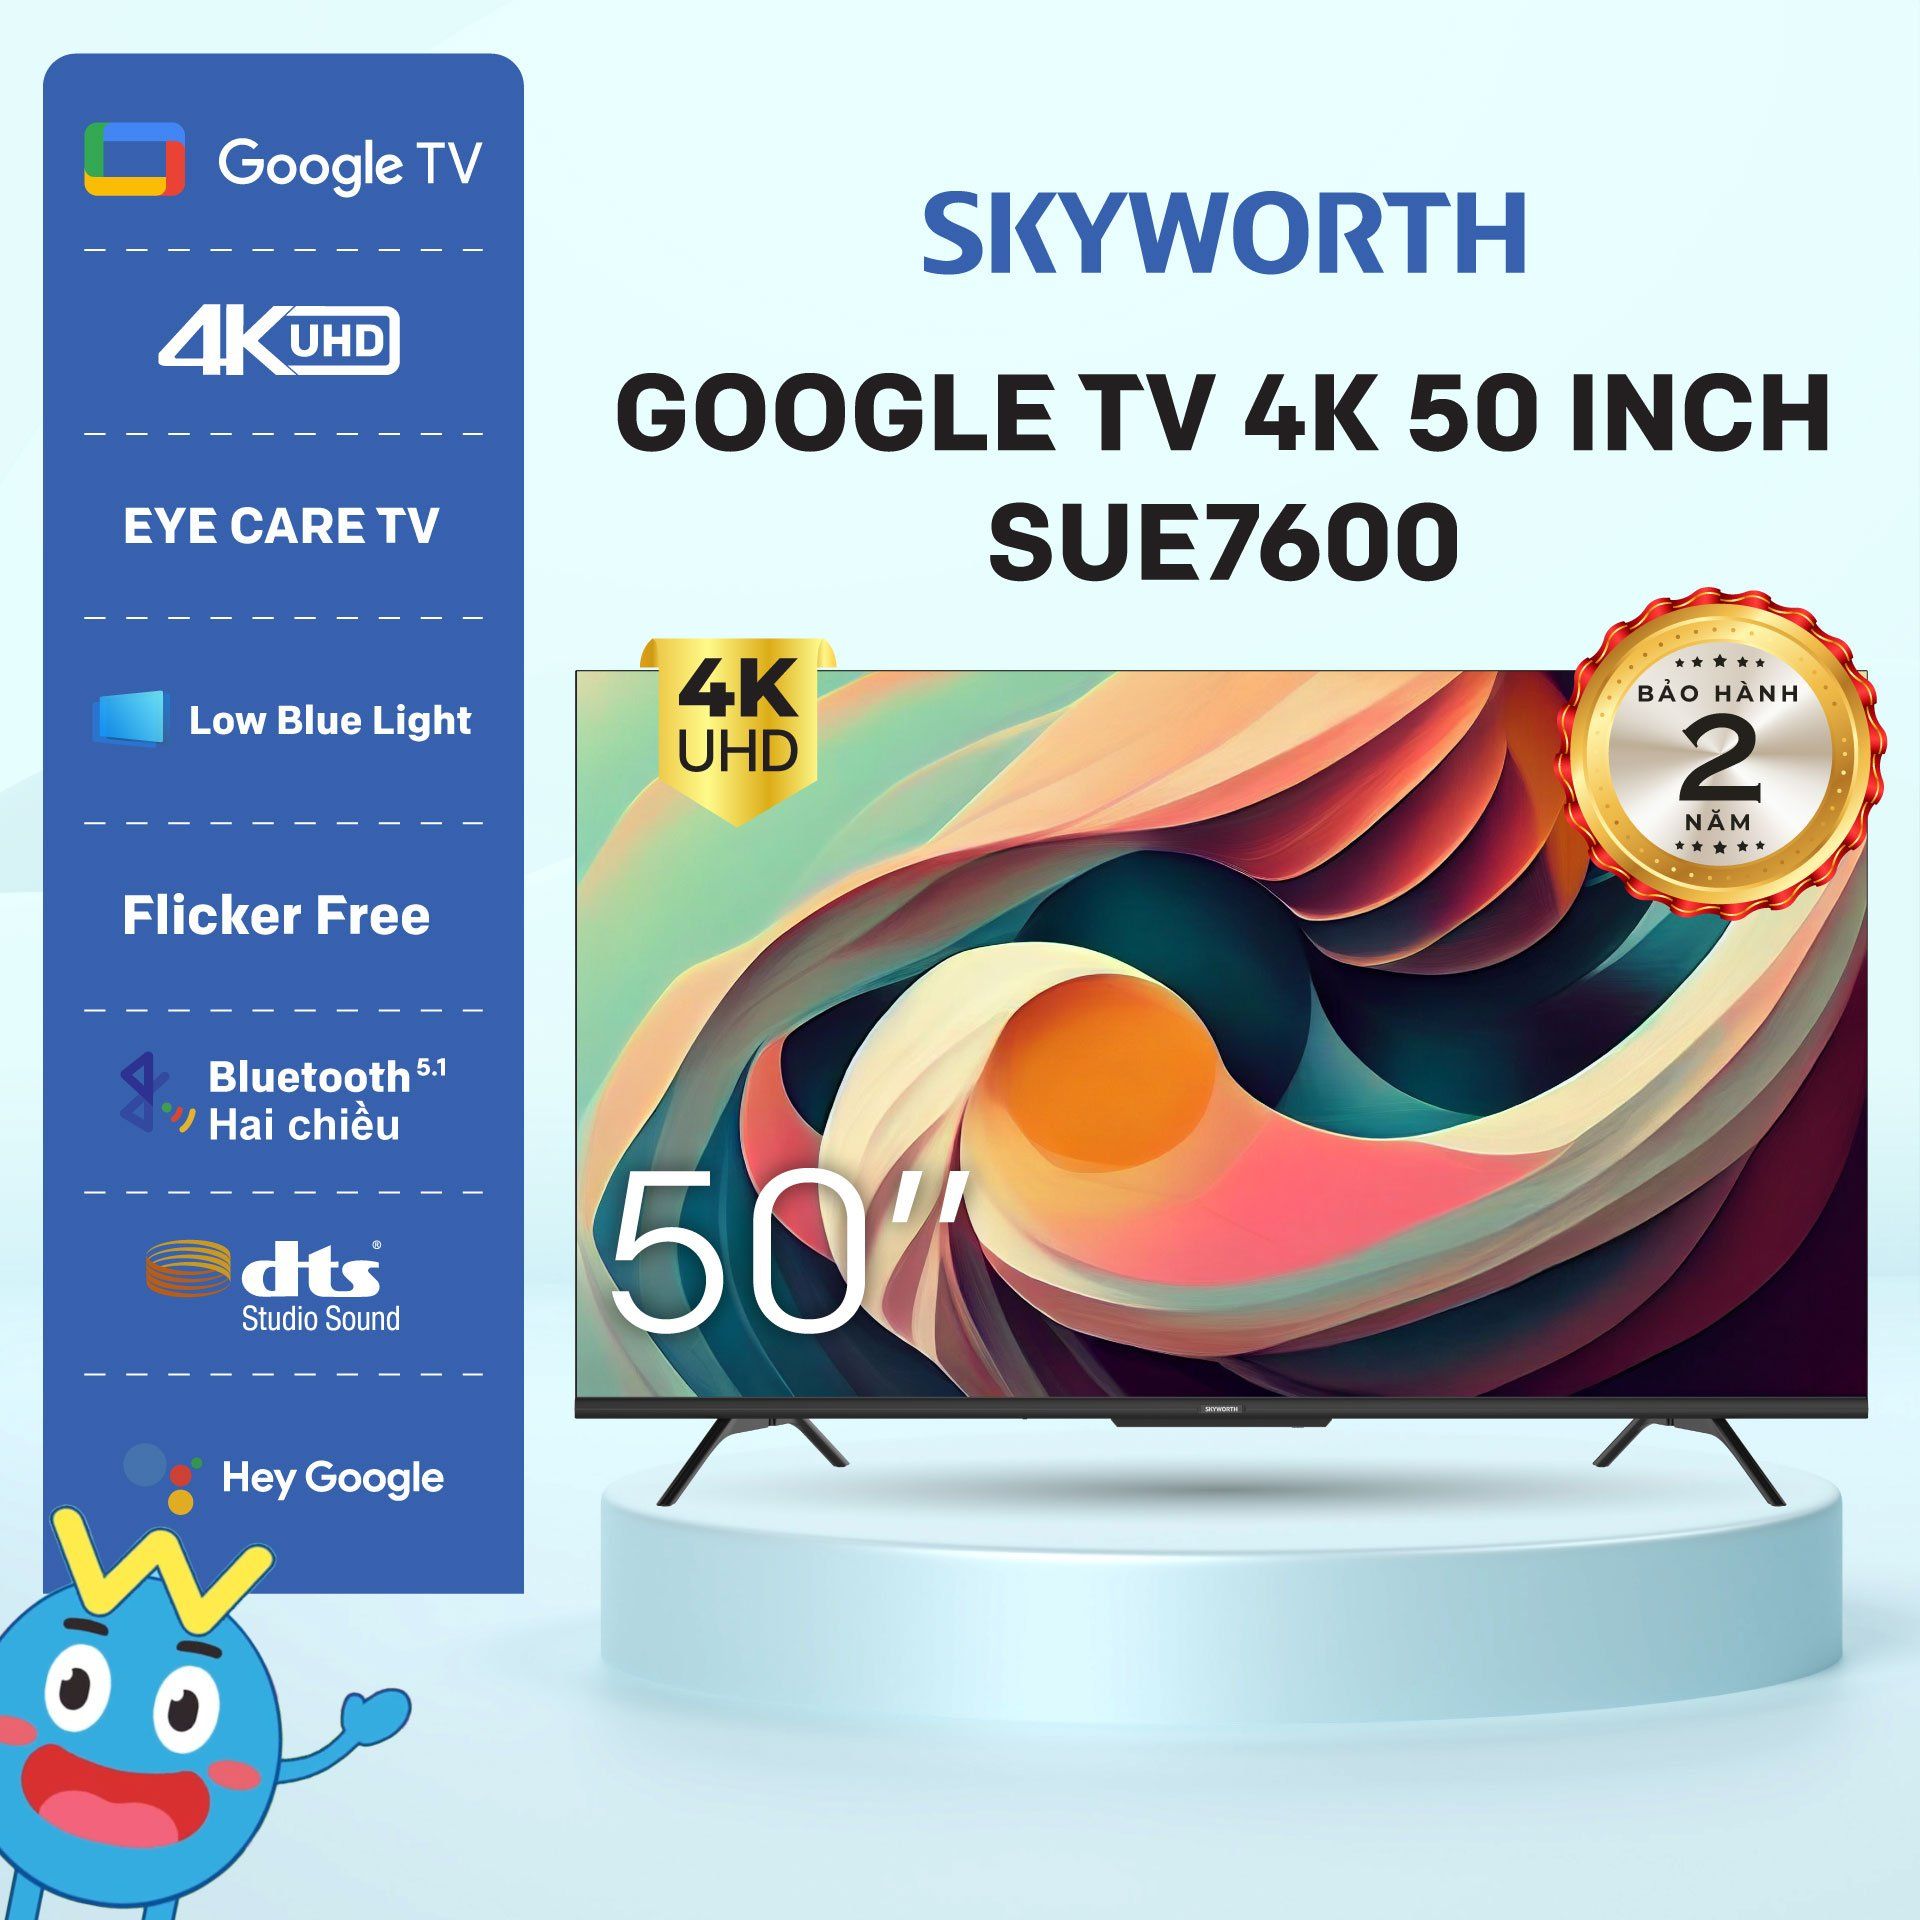  SUE7600 | 4K UHD 50” Google TV 